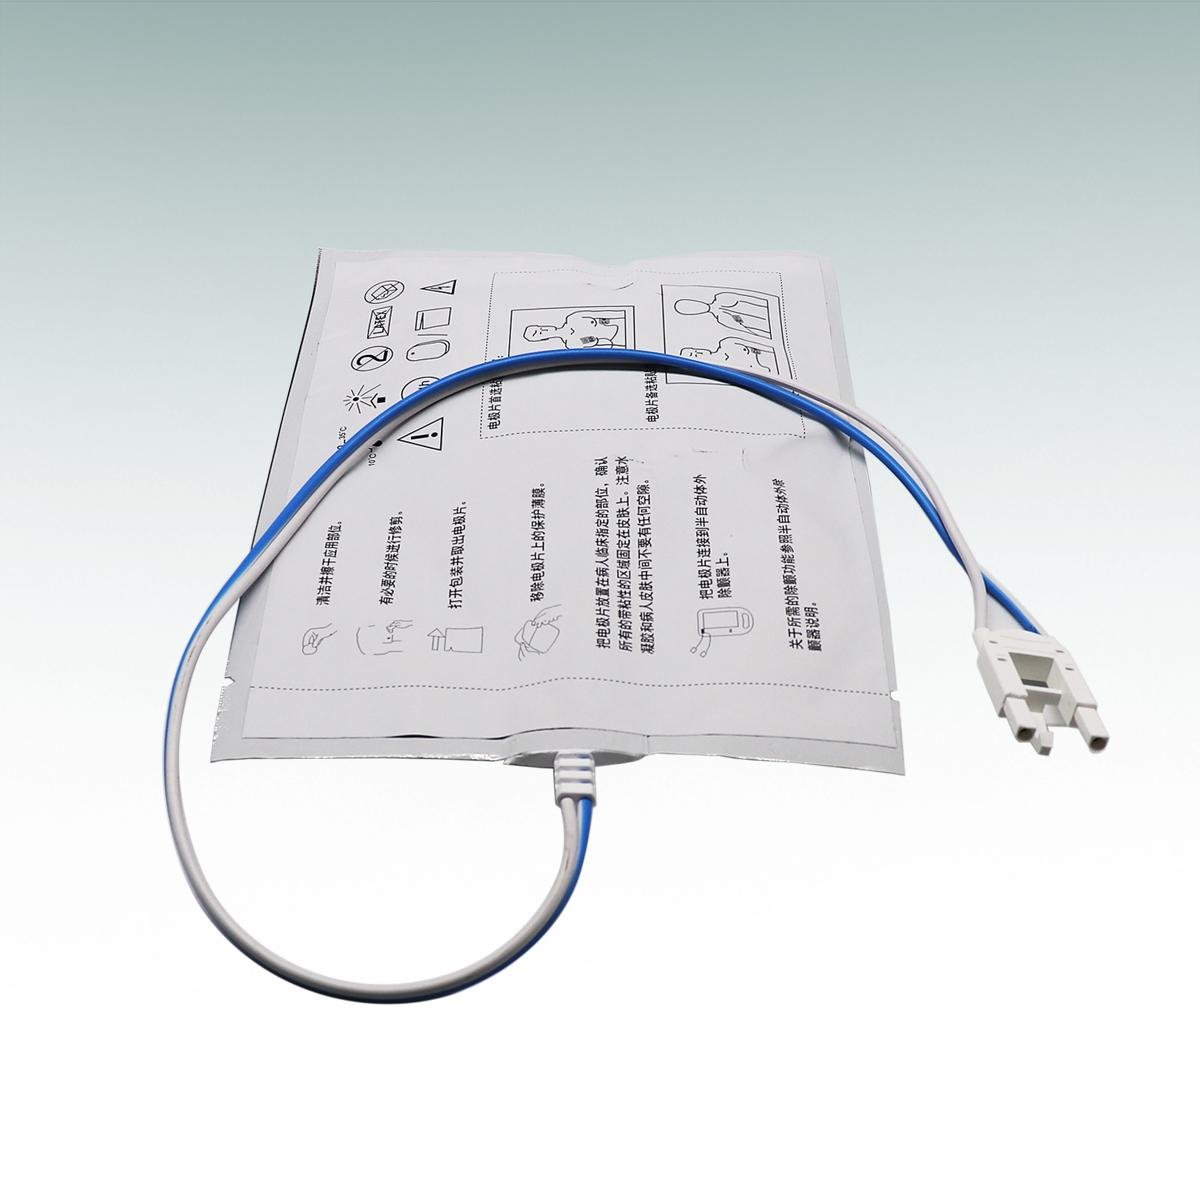 Original M&B defibrillator manual pads adult electrode pad EDC-1035 3